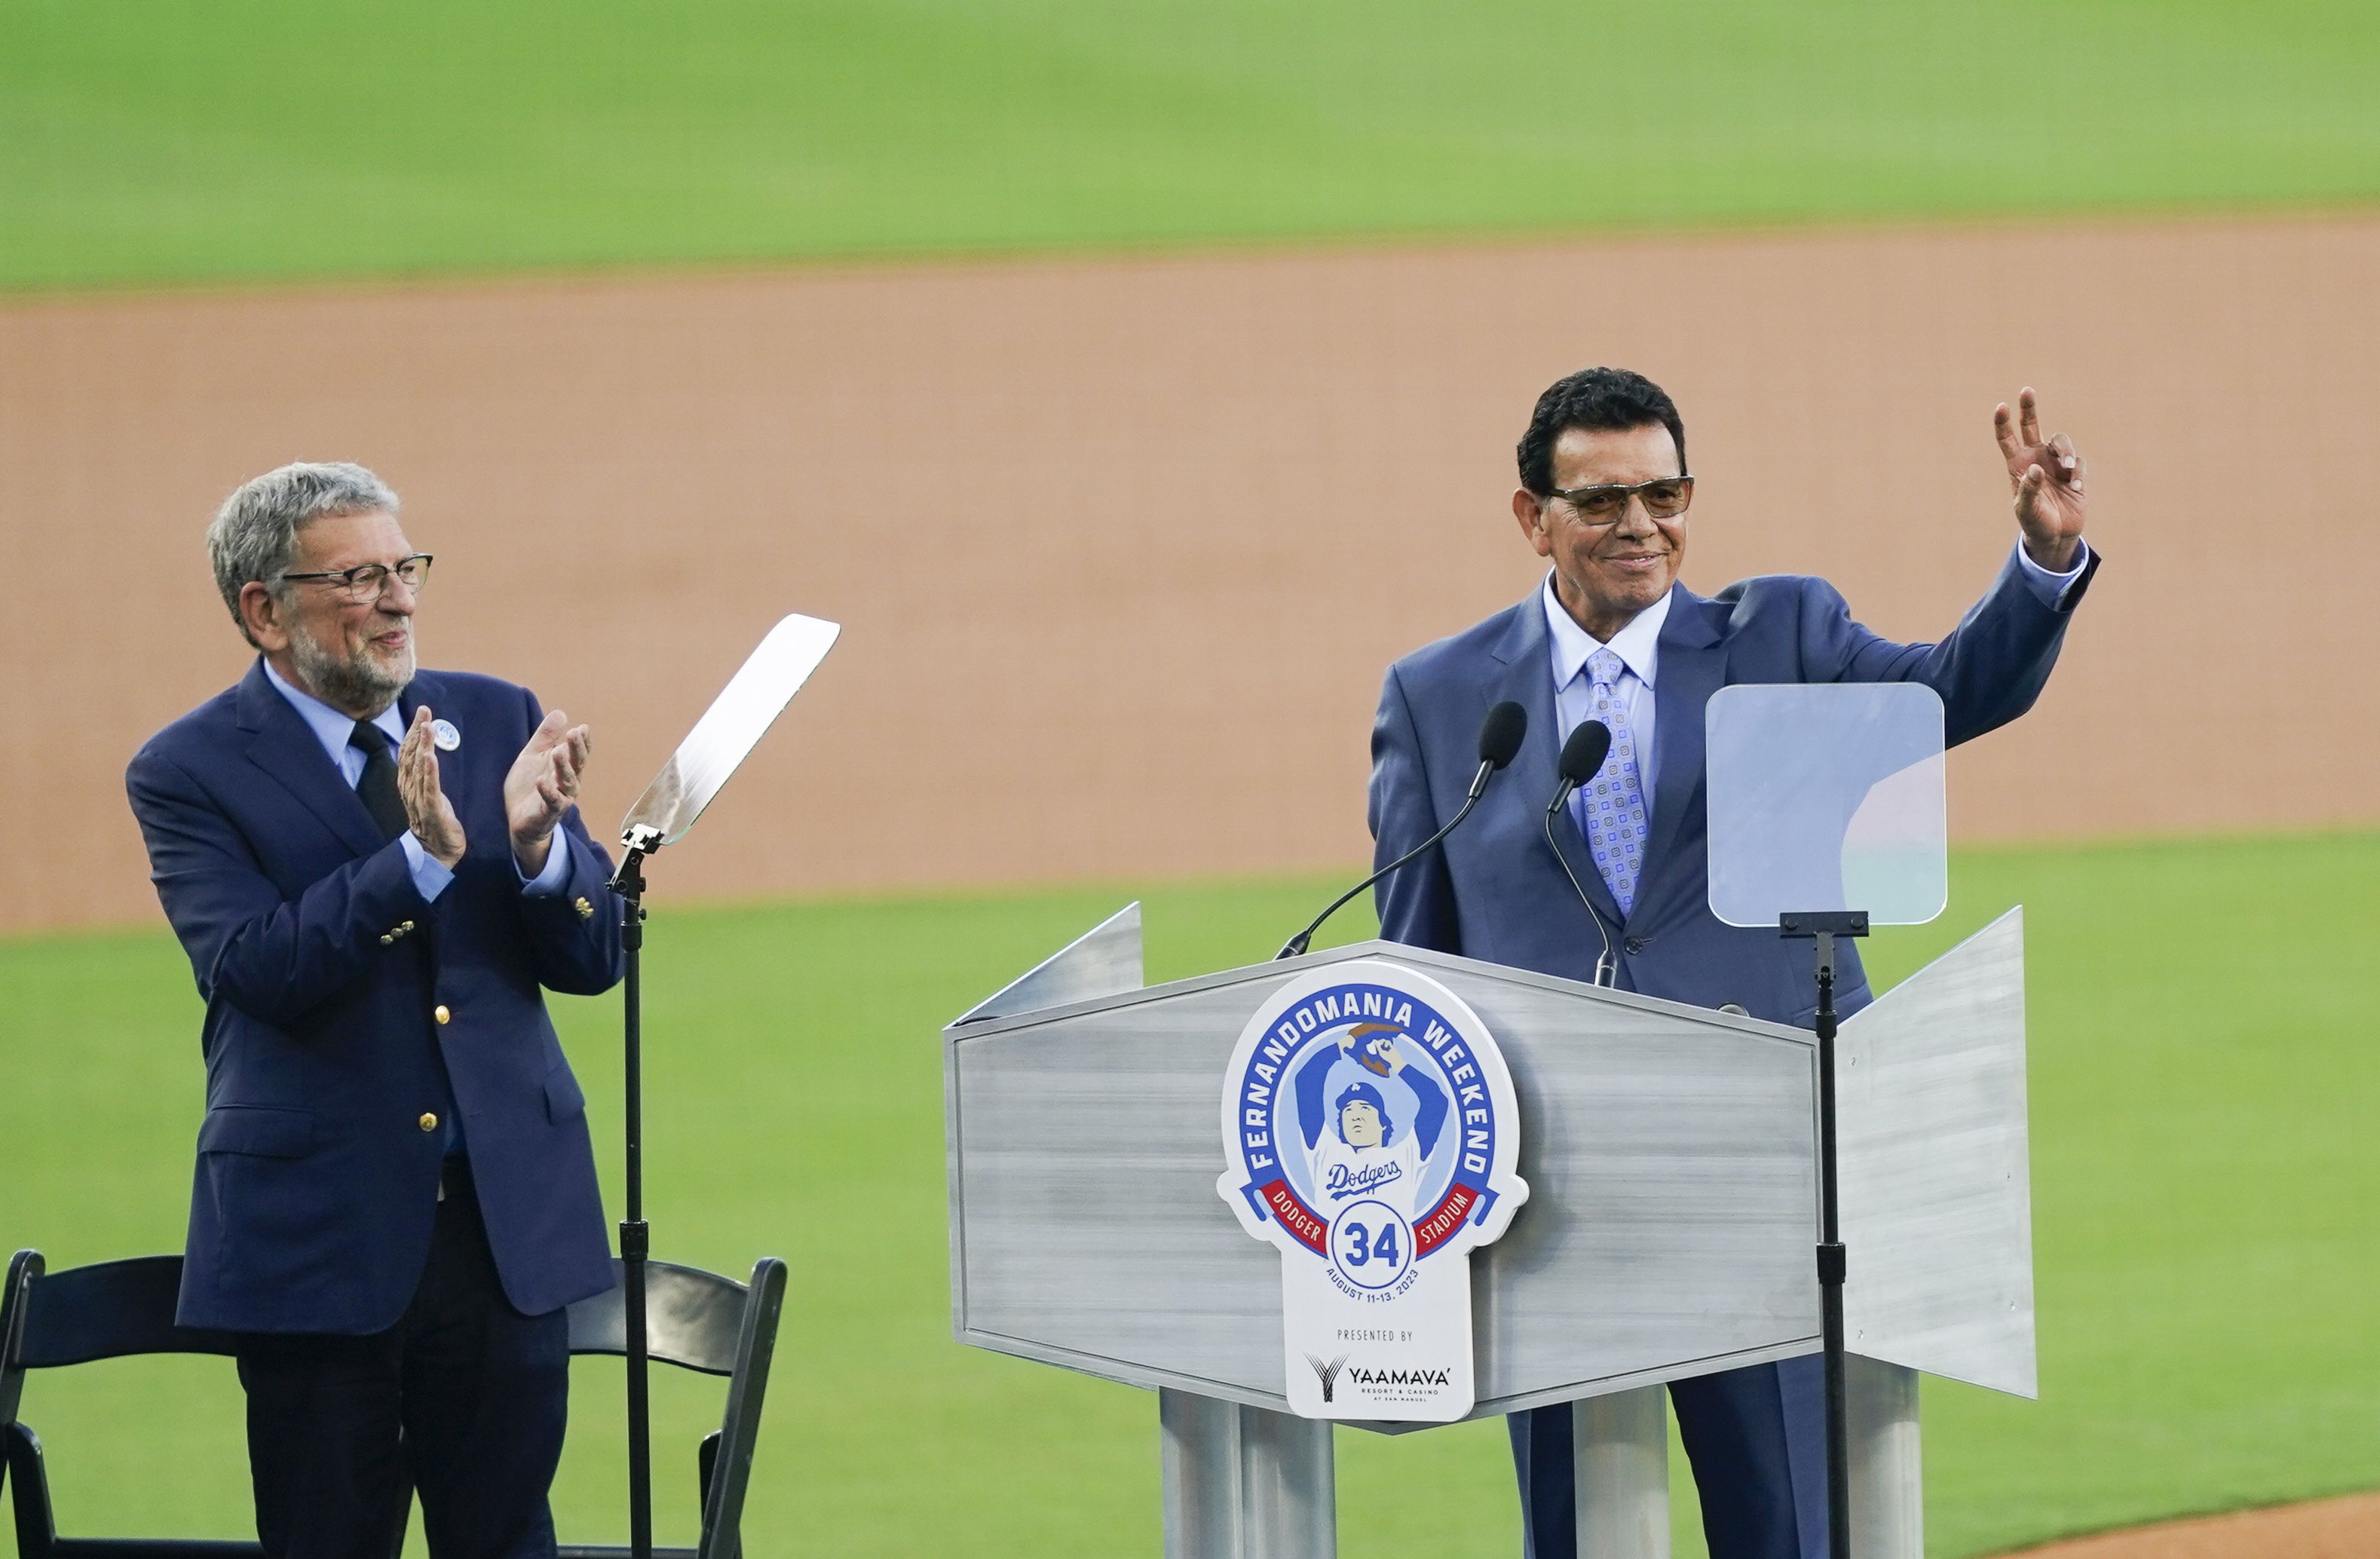 Fernando Valenzuela's number retired by Dodgers